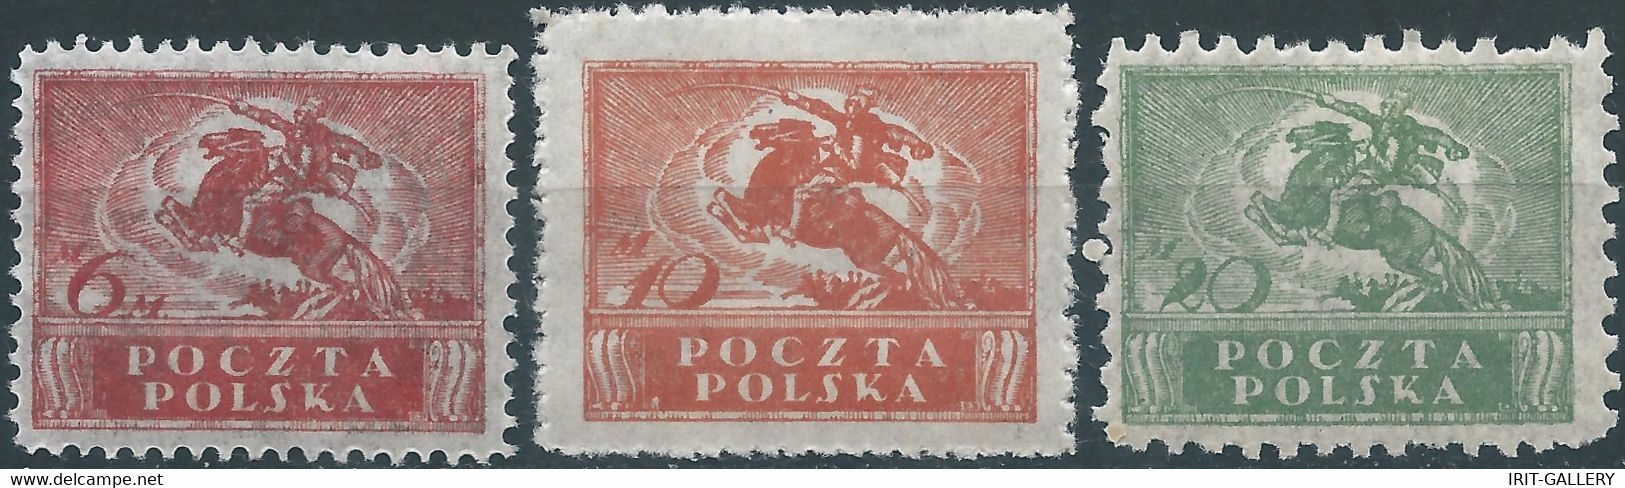 POLONIA-POLAND-POLSKA,1919 South And North Poland Issues,Mint - Ungebraucht